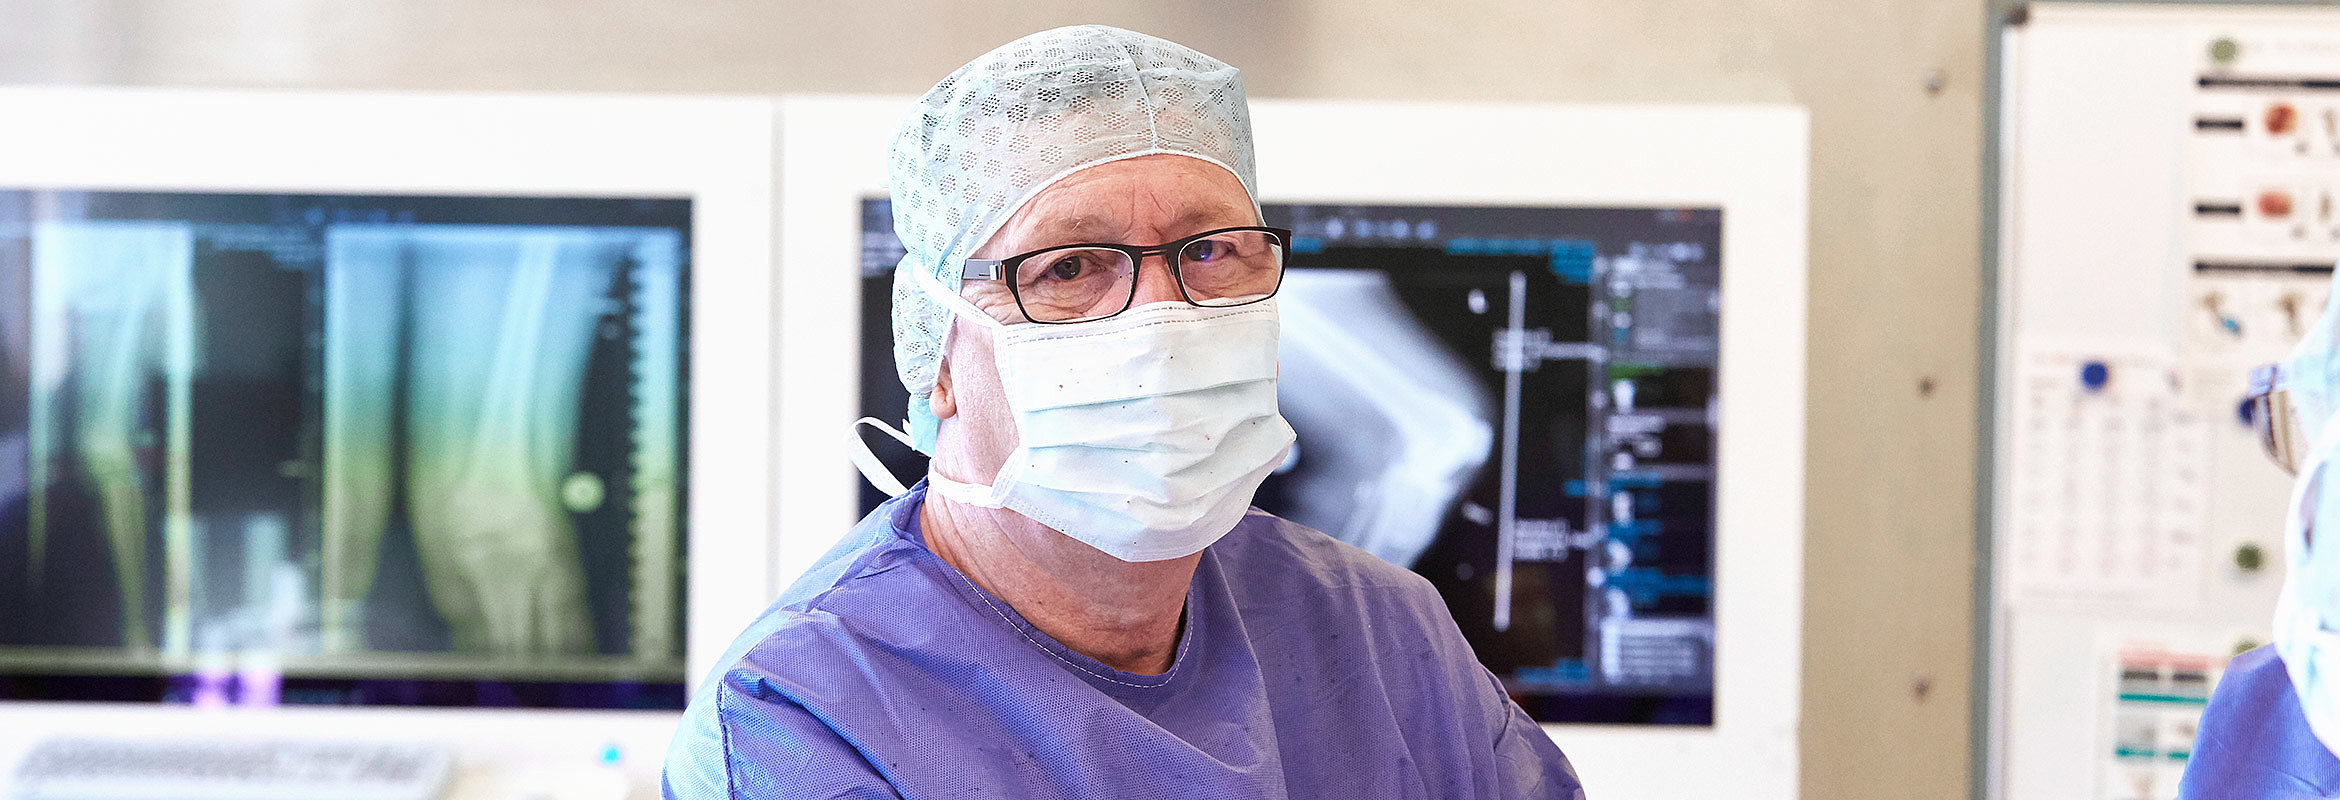 Dr. med. Harald Dinges, Chefarzt der Klinik für Orthopädie in Kusel, im OP